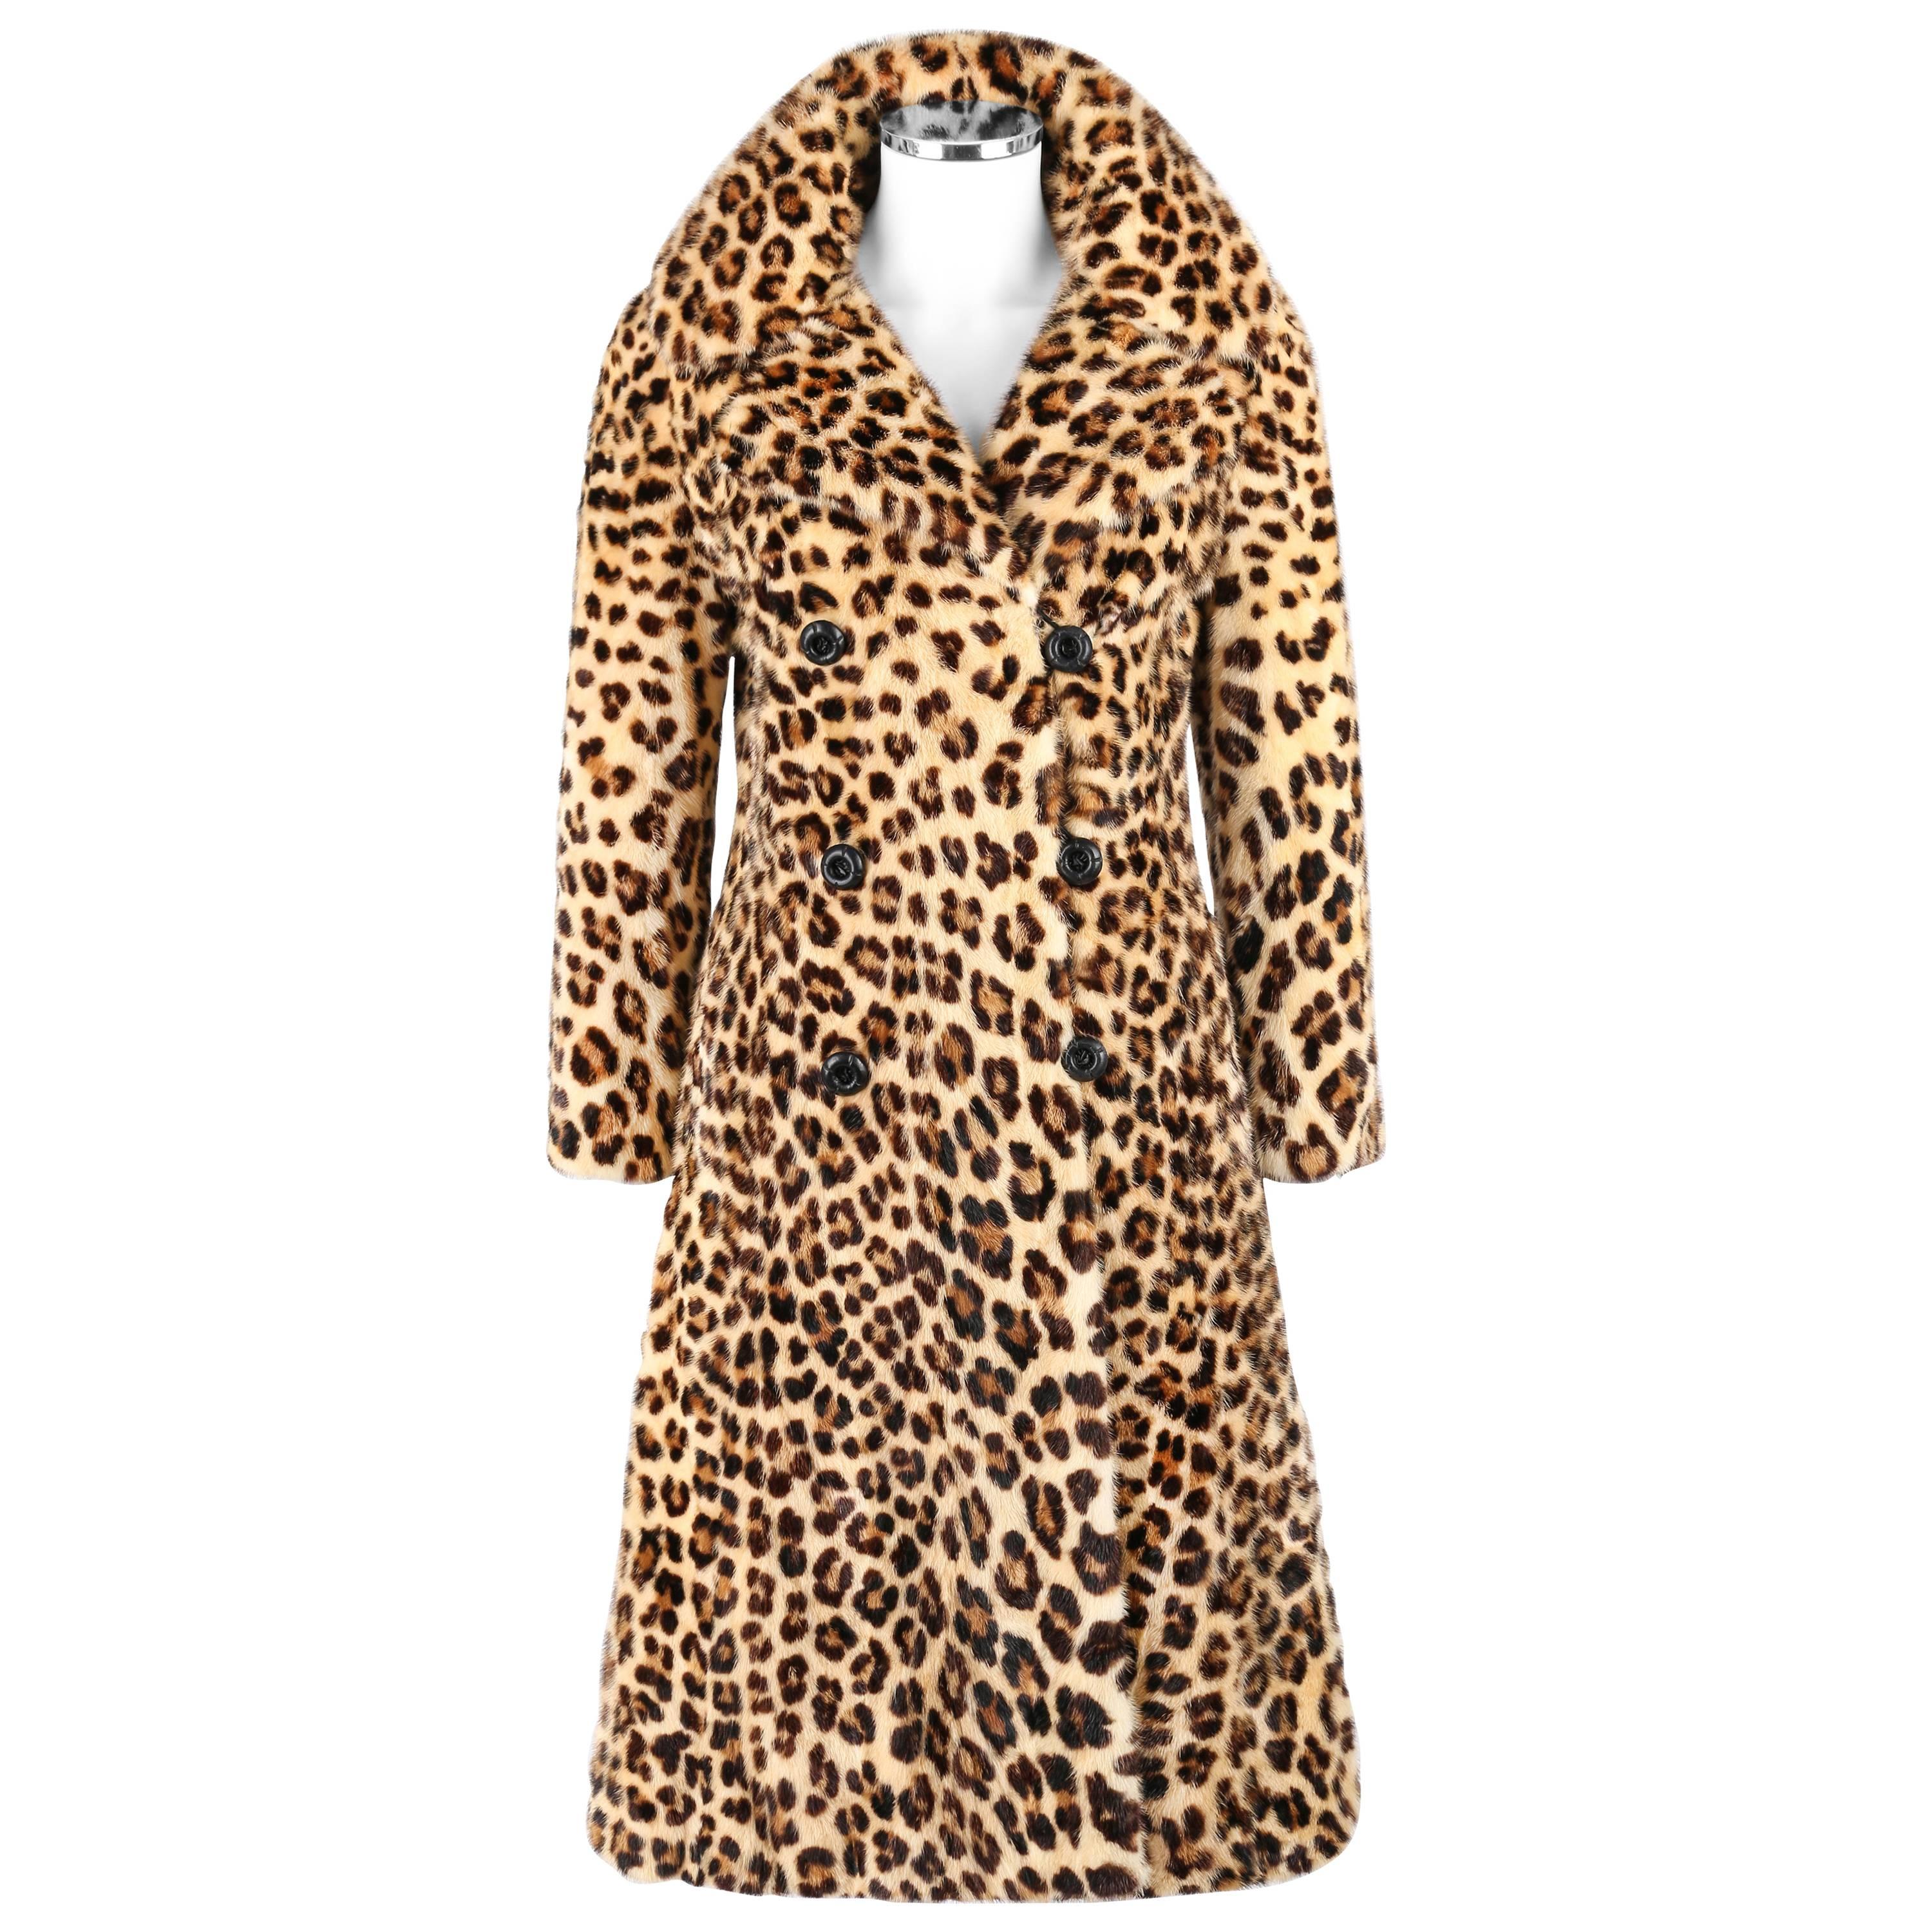 FURS BY WILIBEL Genuine Mink With Leopard Animal Print Princess Coat Jacket